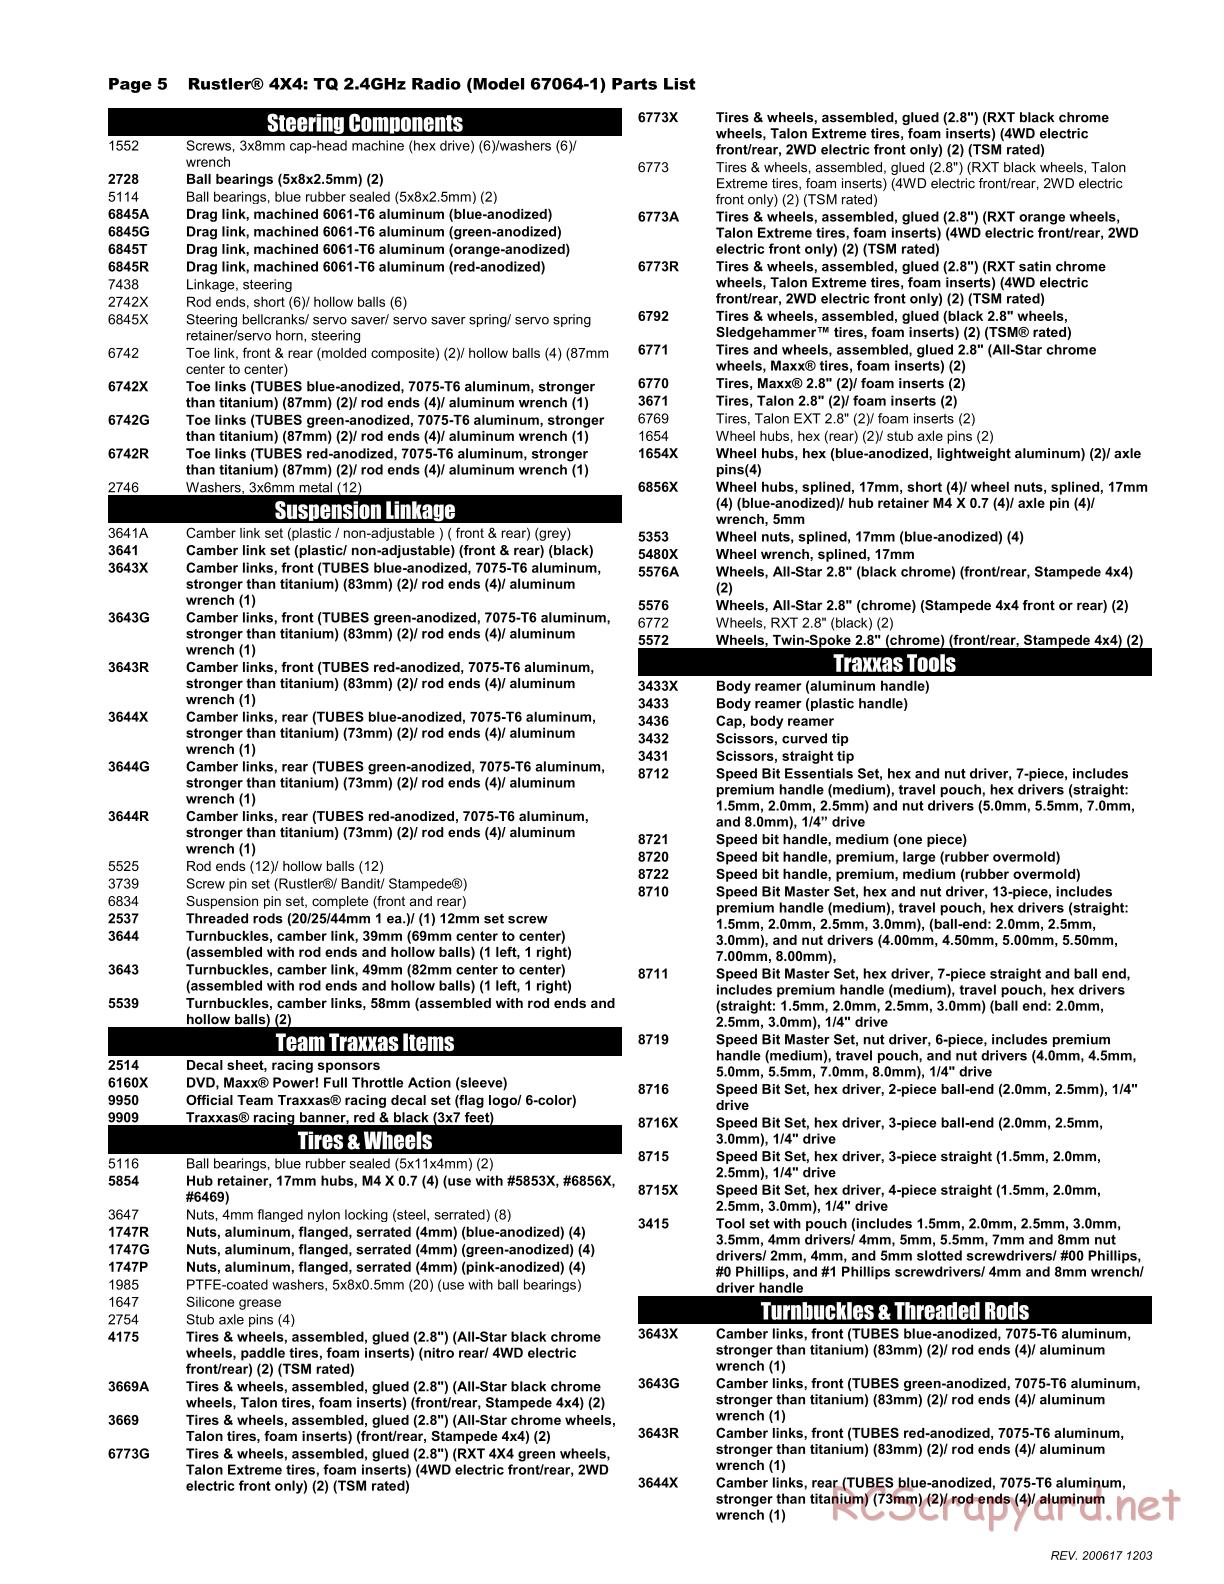 Traxxas - Rustler 4x4 XL-5 - Parts List - Page 5